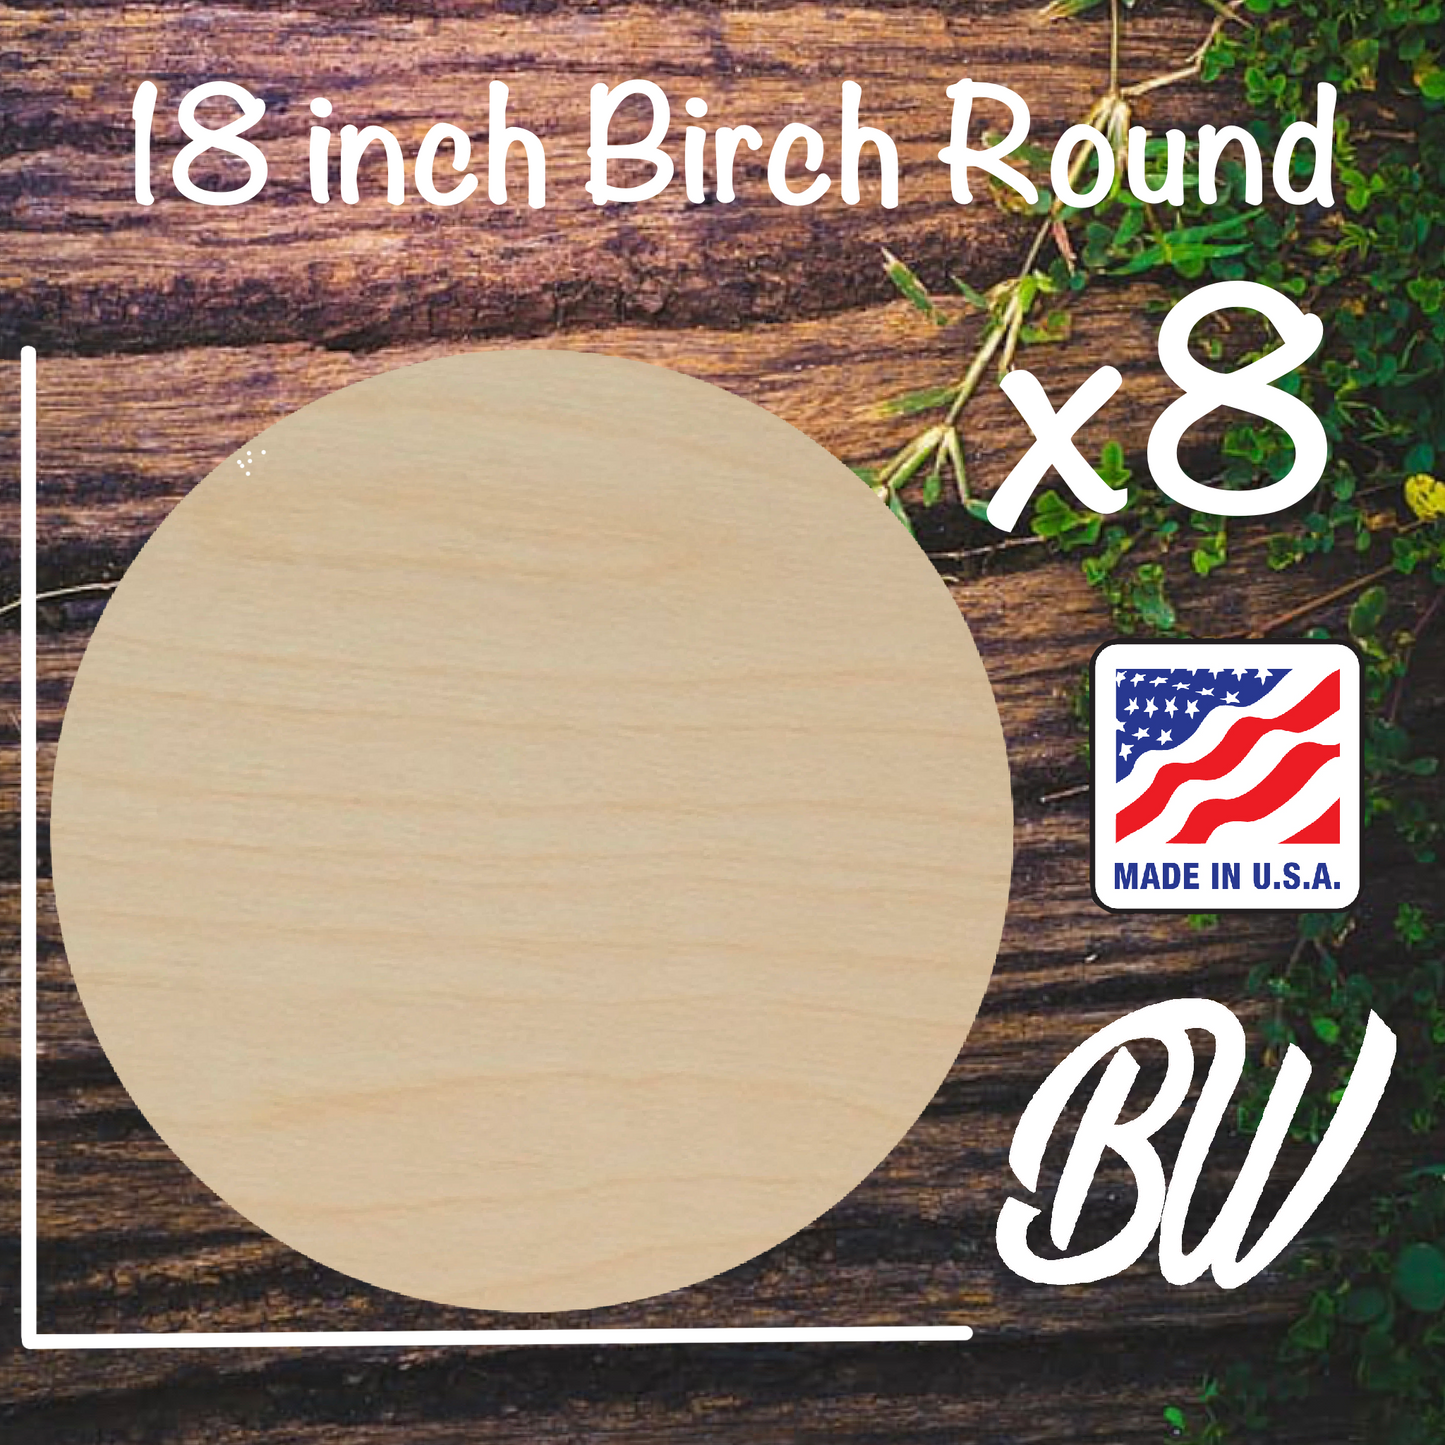 18inch Birch Rounds x8 ( 1/4 inch )